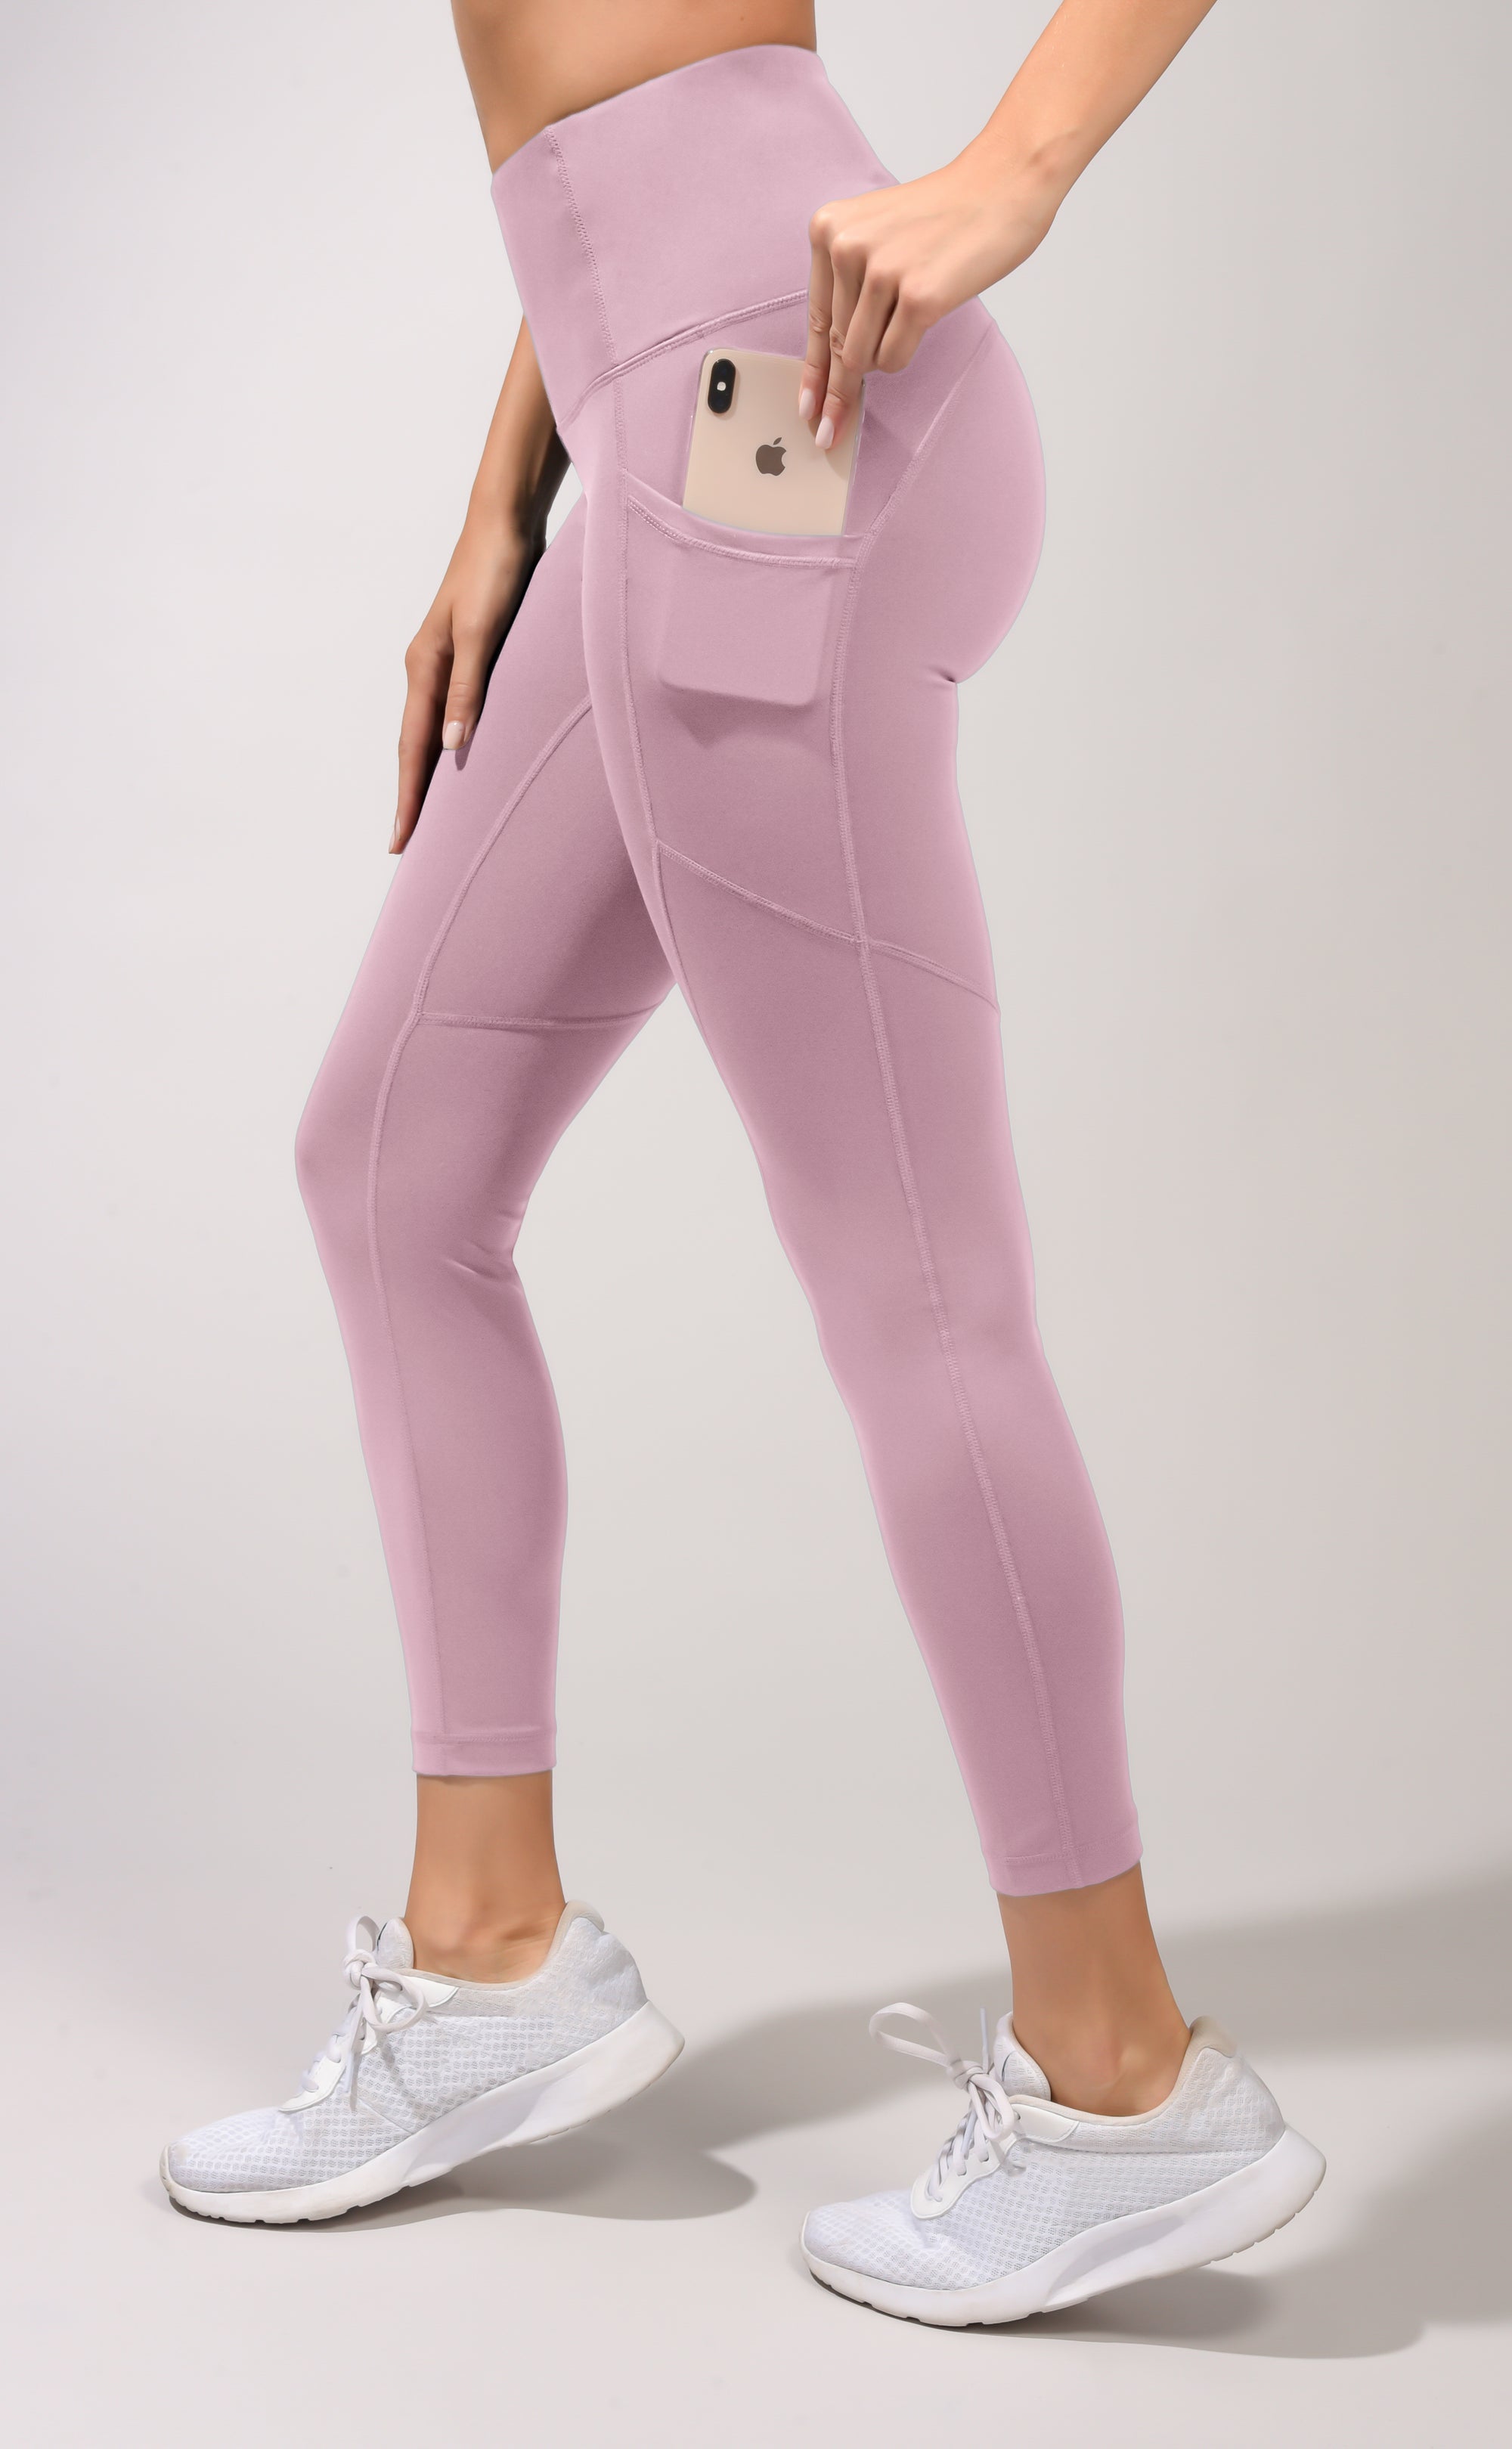 Yogalicious LUX Leggings Yoga Pants Ruched Pale Pink Size Medium